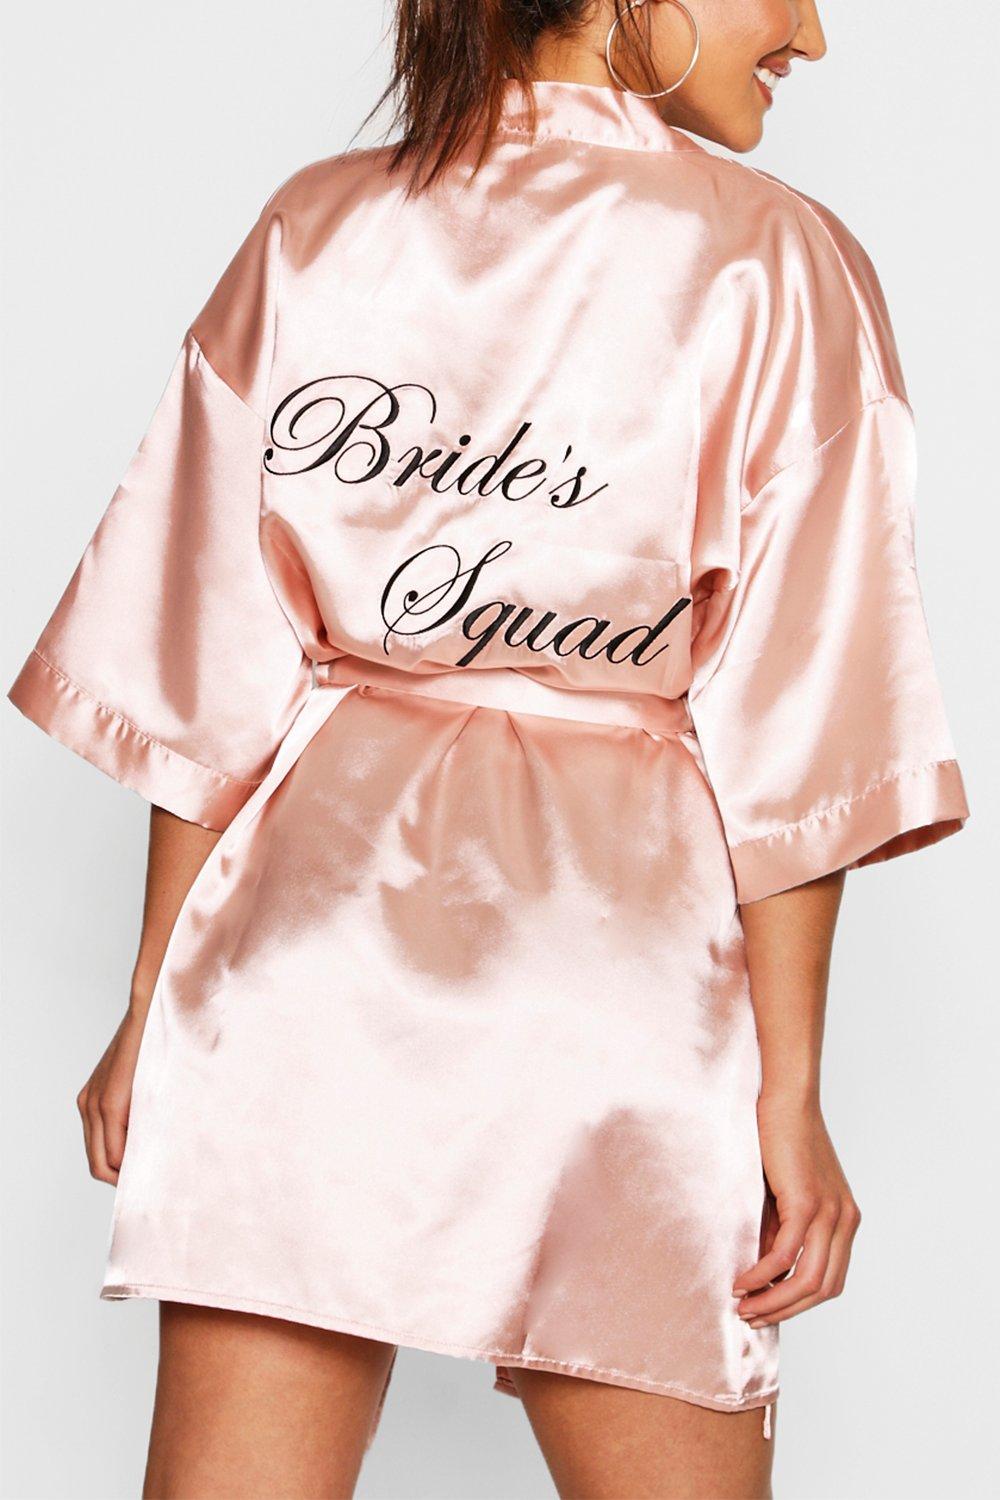 https://media.boohoo.com/i/boohoo/nzz89932_rose%20gold_xl_1/female-rose%20gold-brides-squad-satin-robe